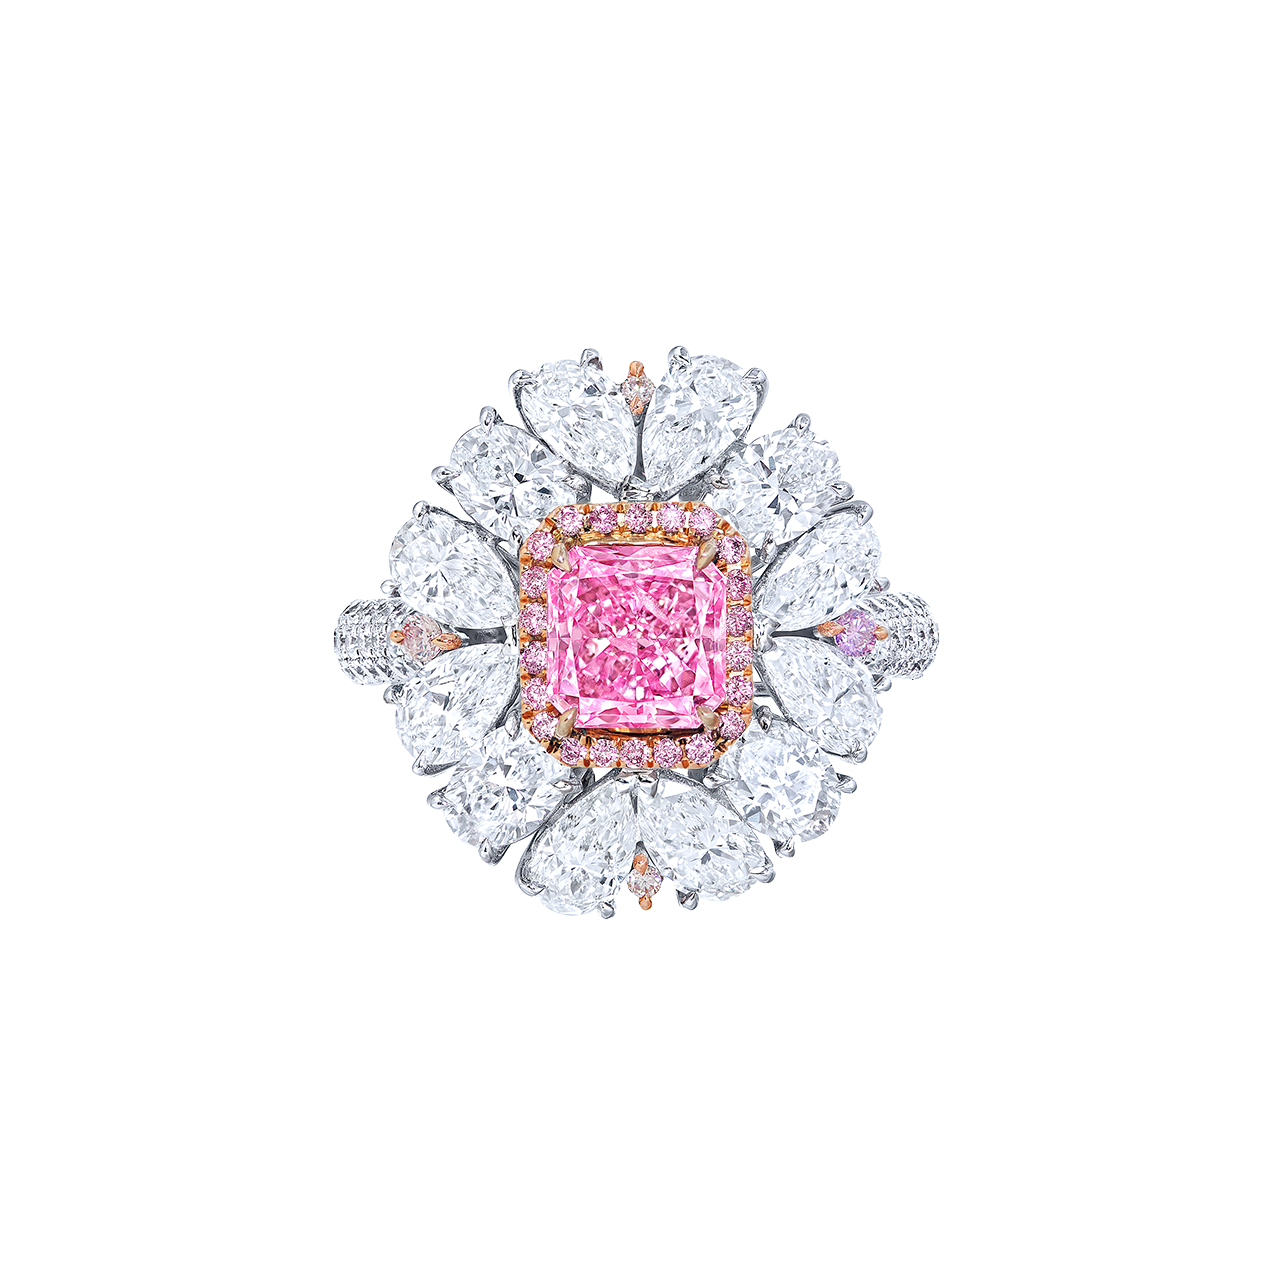 GIA 1.03克拉 濃彩粉鑽戒
Fancy Intense Purplish Pink 
Colored Diamond Ring